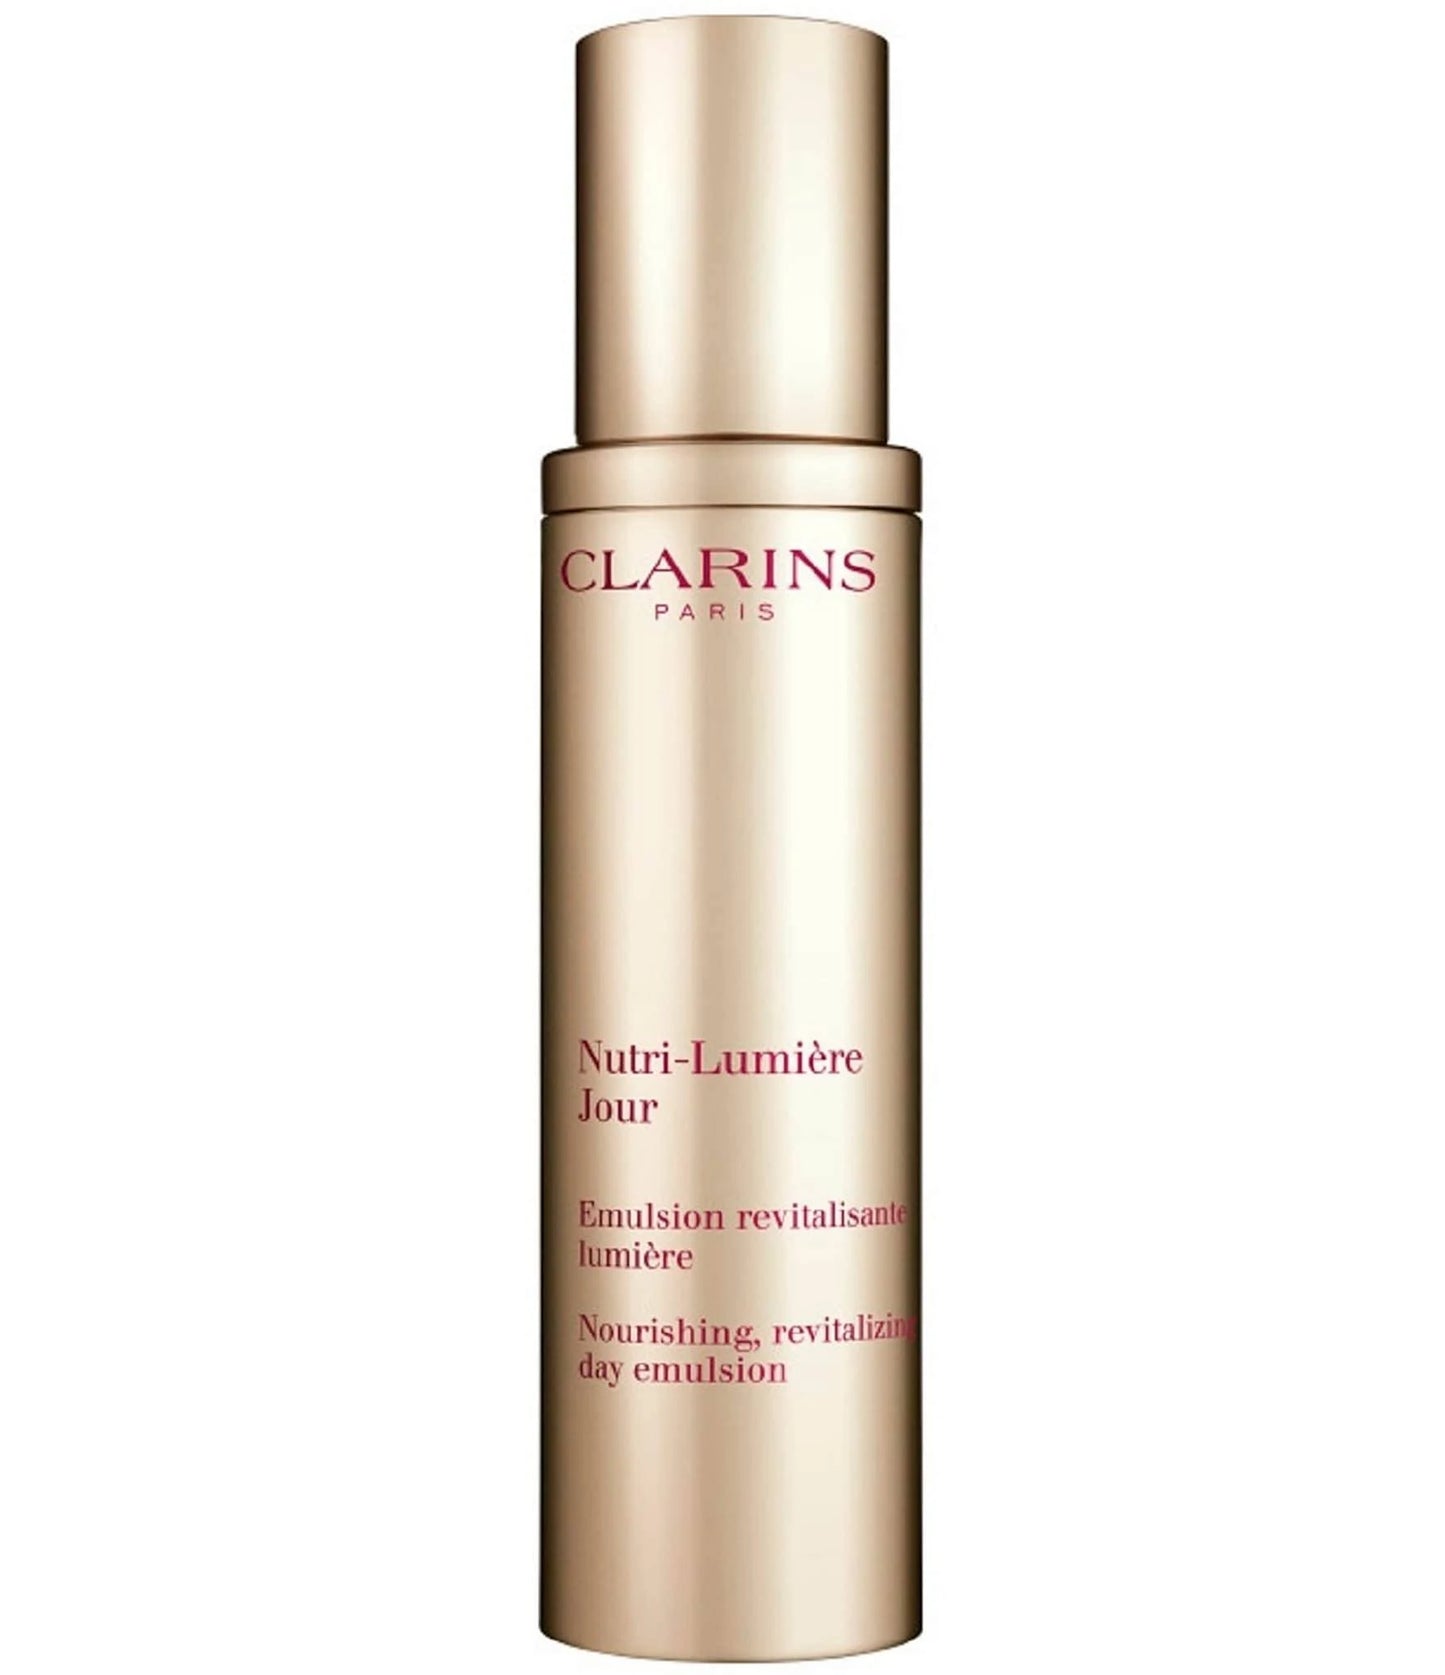 Clarins Nutri-Lumiere Jour Nourishing, Revitalizing Day Emulsion